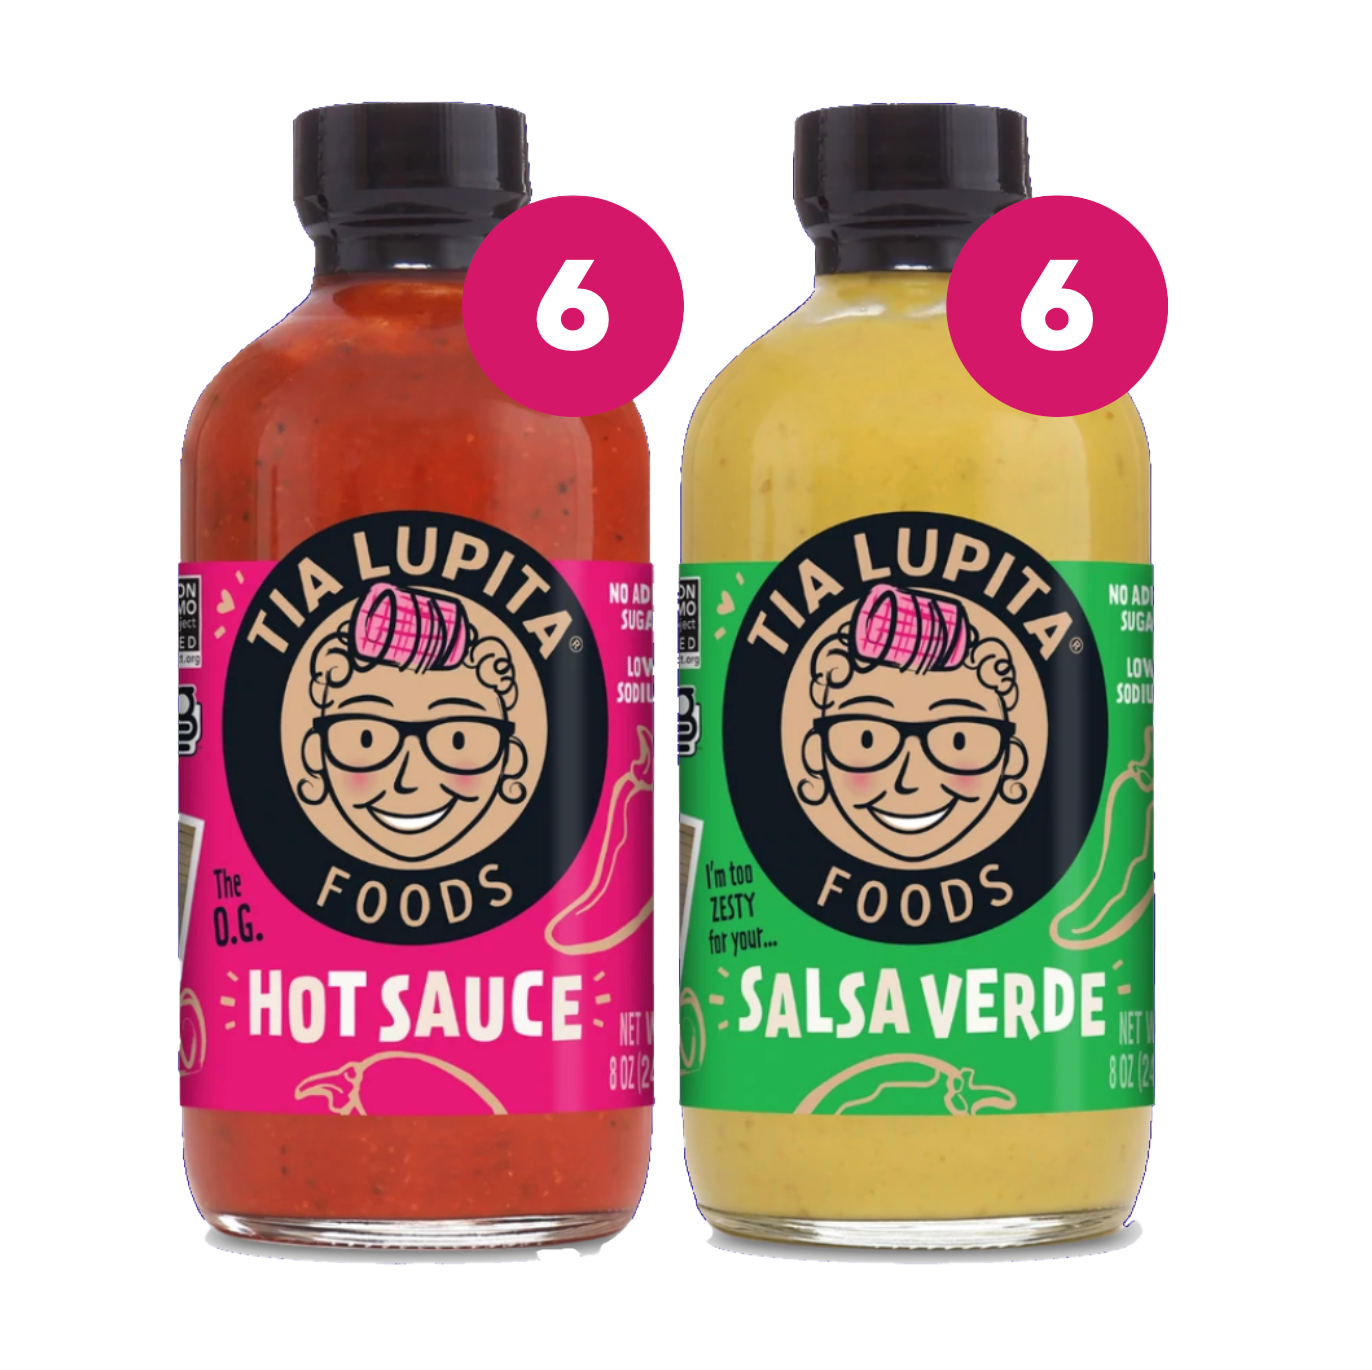 Case of 12 Bottles - 6 Hot Sauce and 6 Salsa Verde